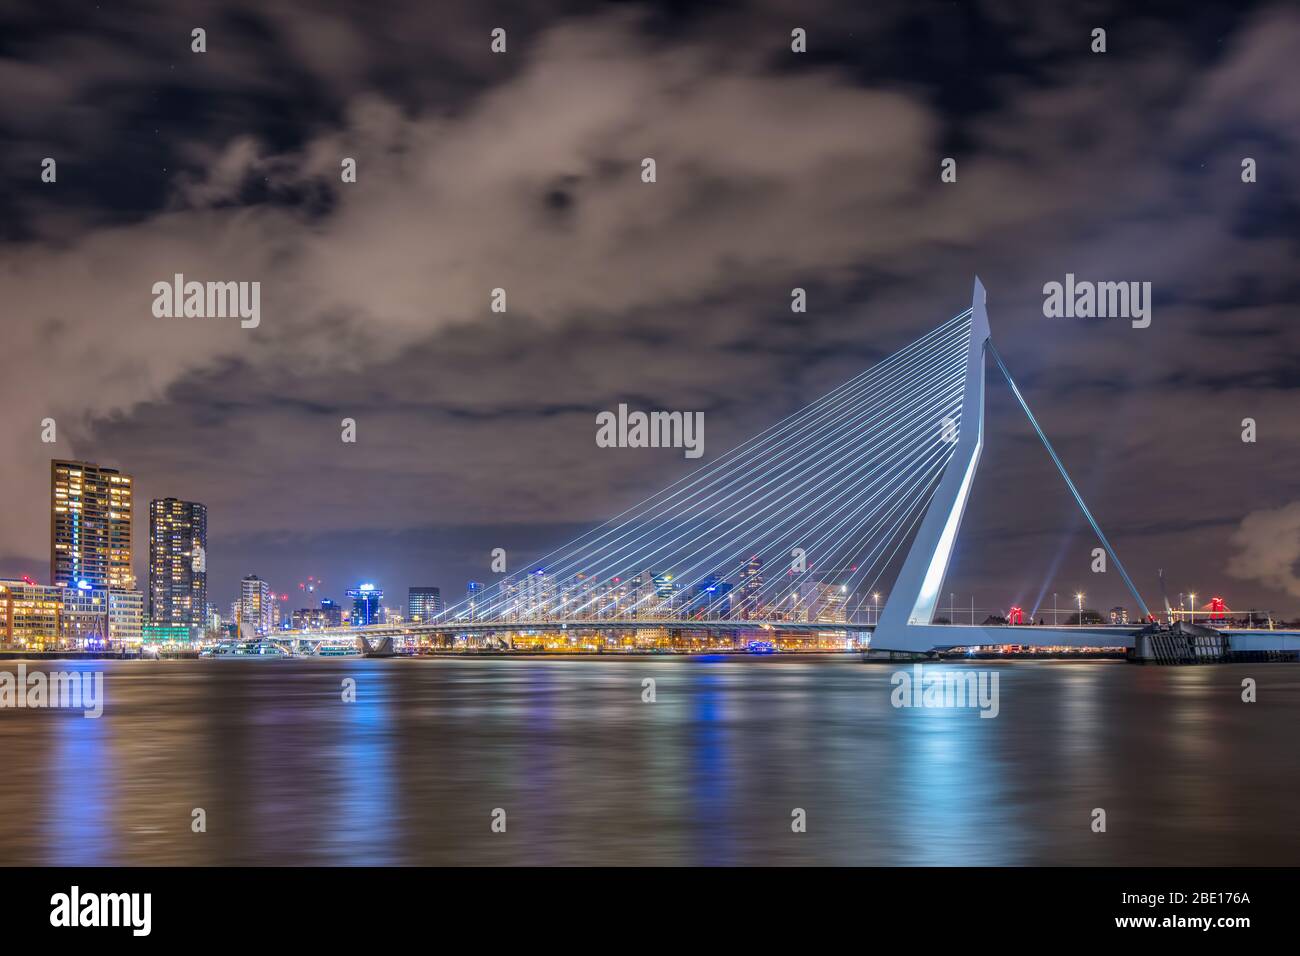 ROTTERDAM-MARCH 13, 2020. The Erasmus Bridge at night. The 284m long bridge was designed by Ben van Berkel (UNStudio). Stock Photo